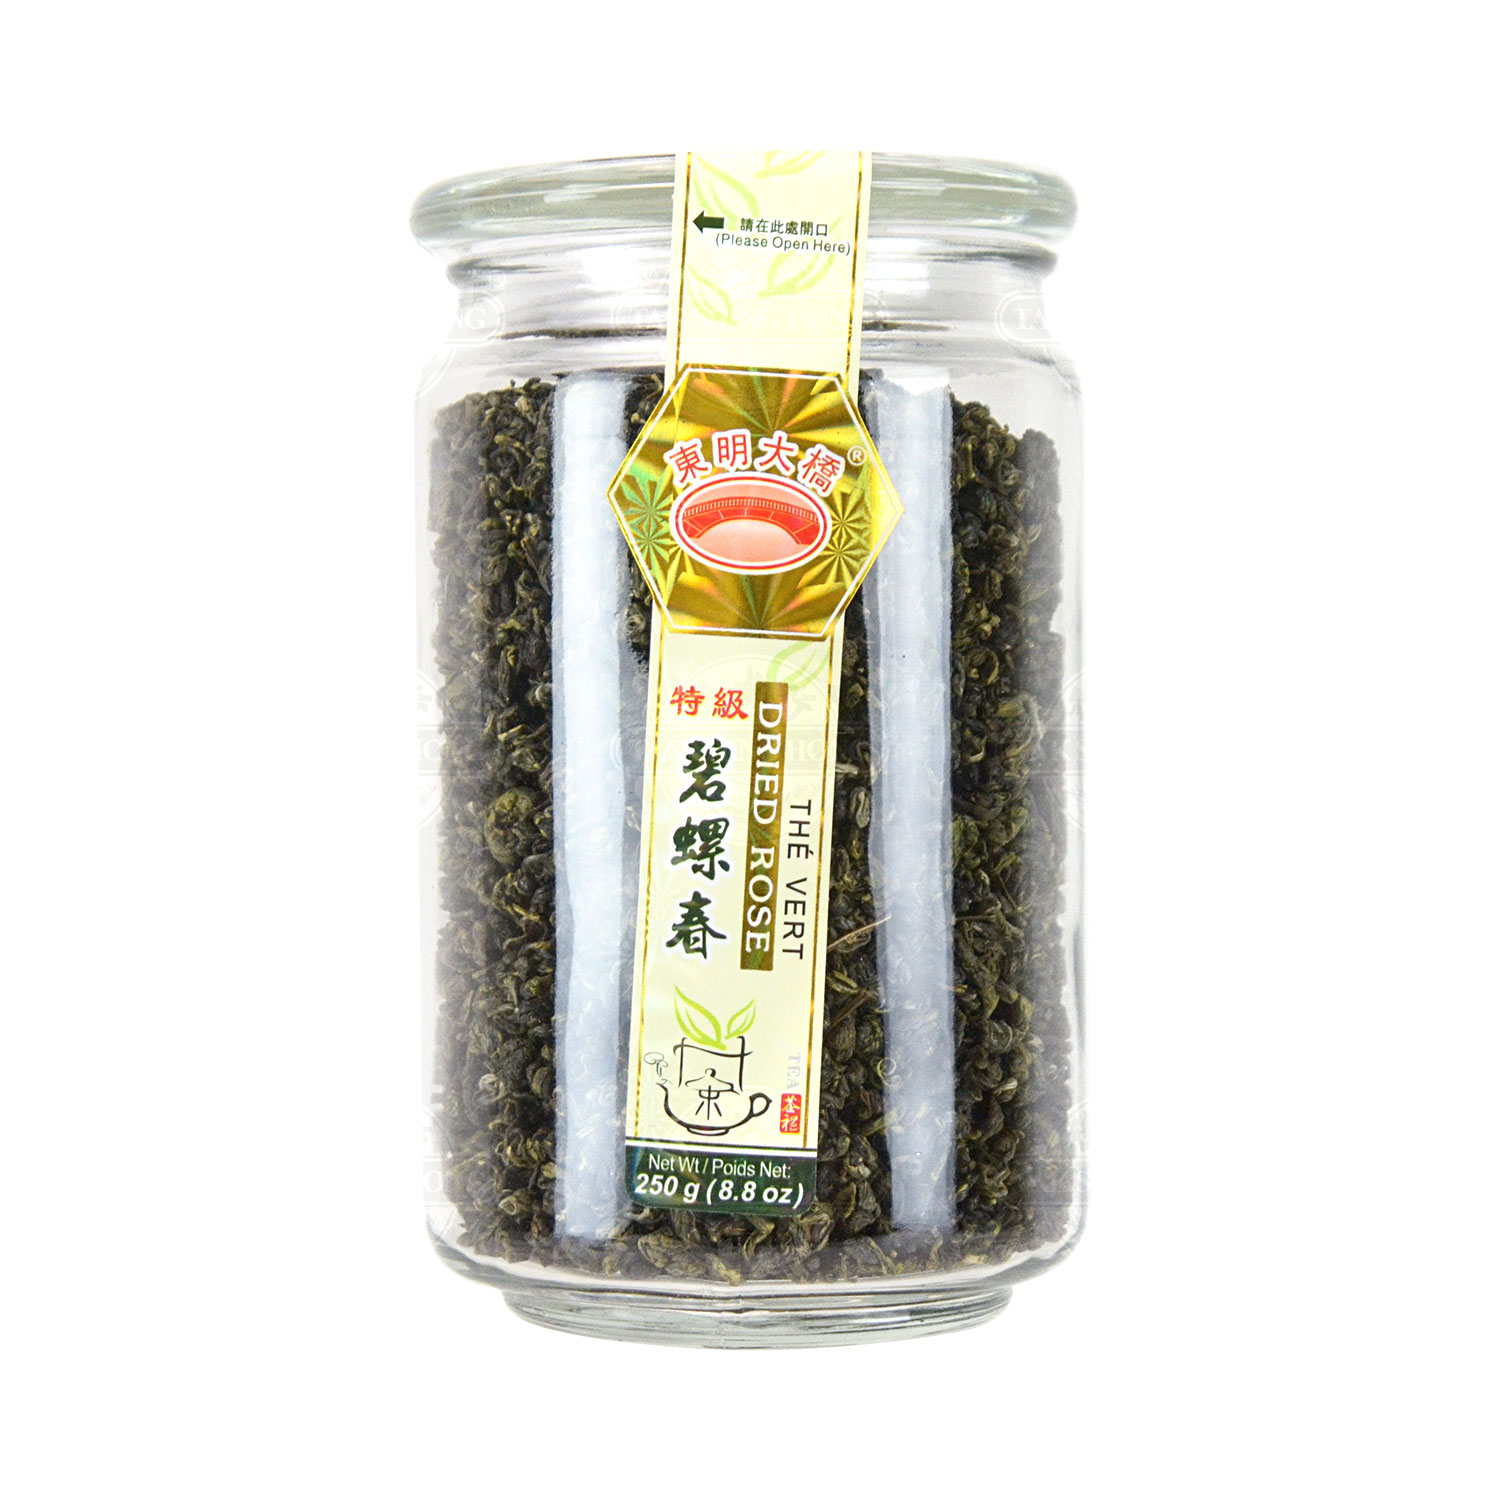 DMDB Dried Rose (Biluochun) Green Tea 250g - Tak Shing Hong